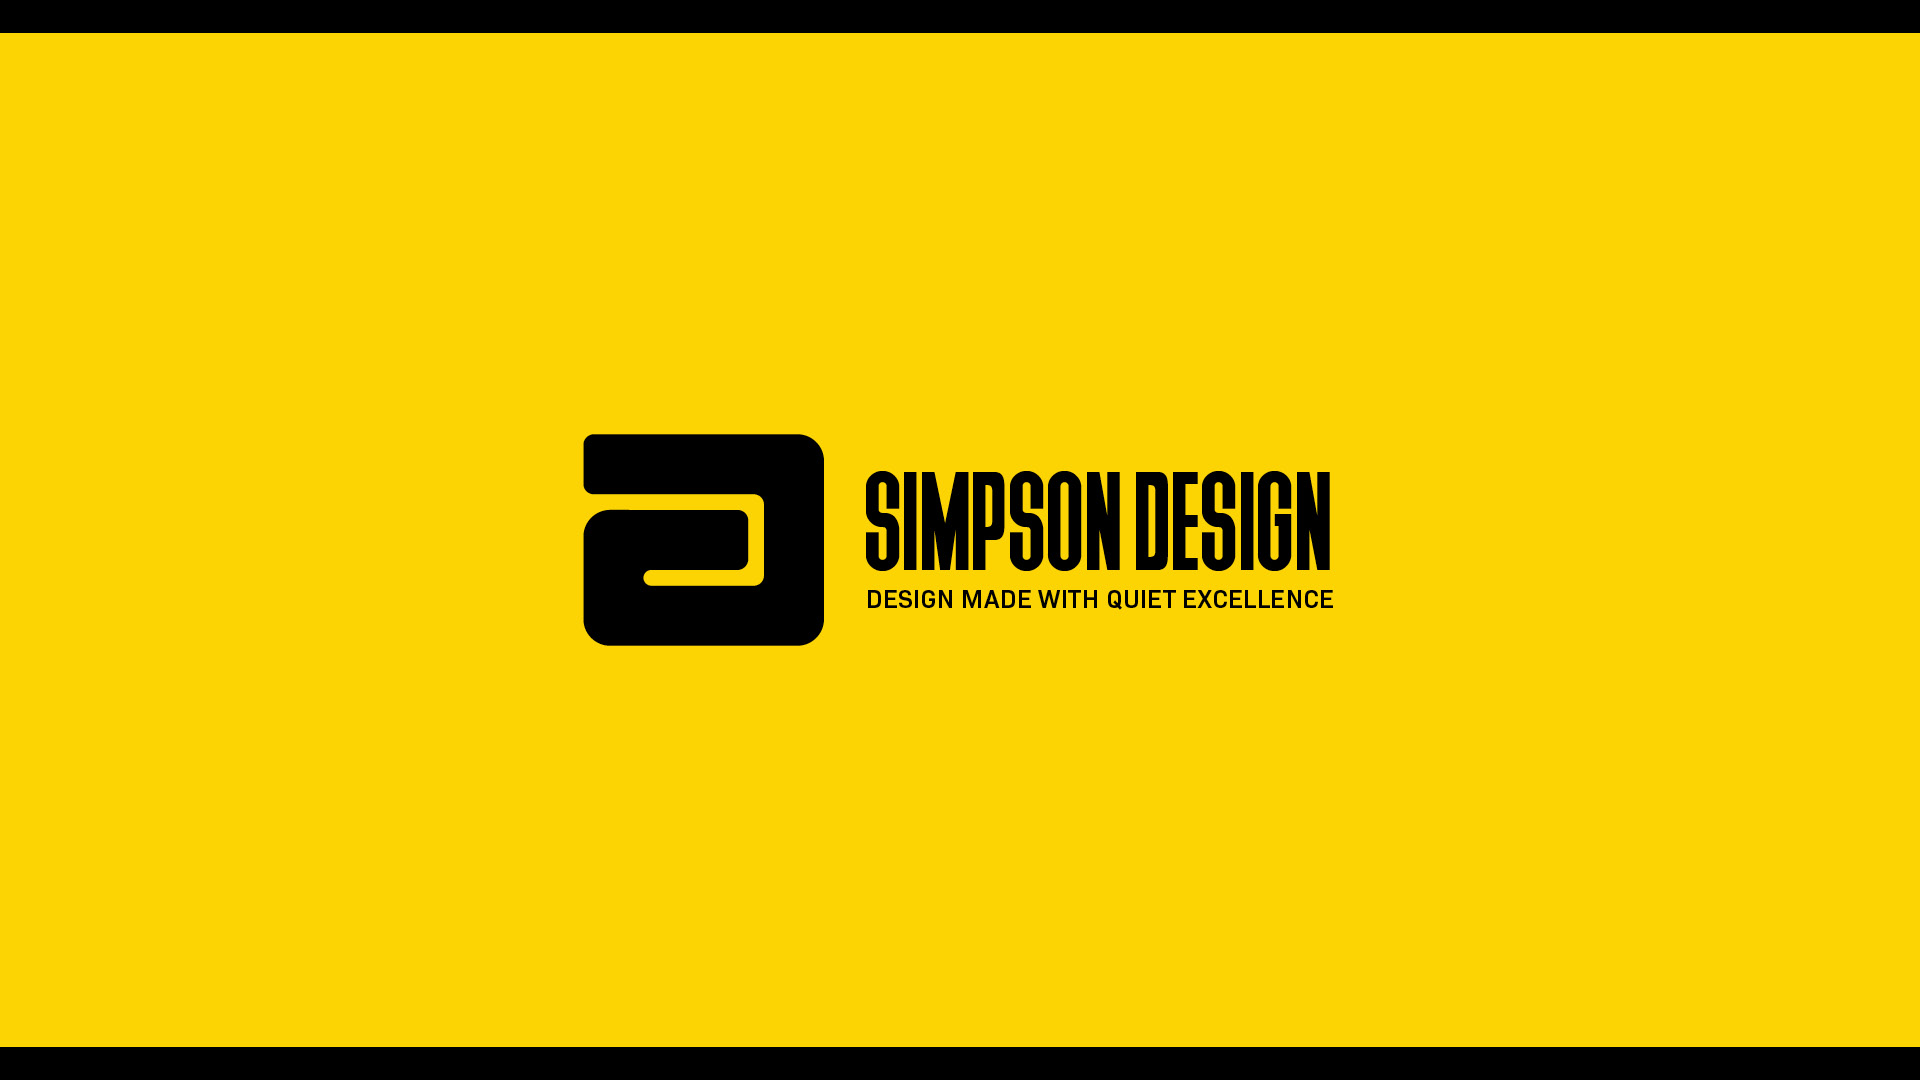  / Simpson Designs, https://www.simpson-designs.com 